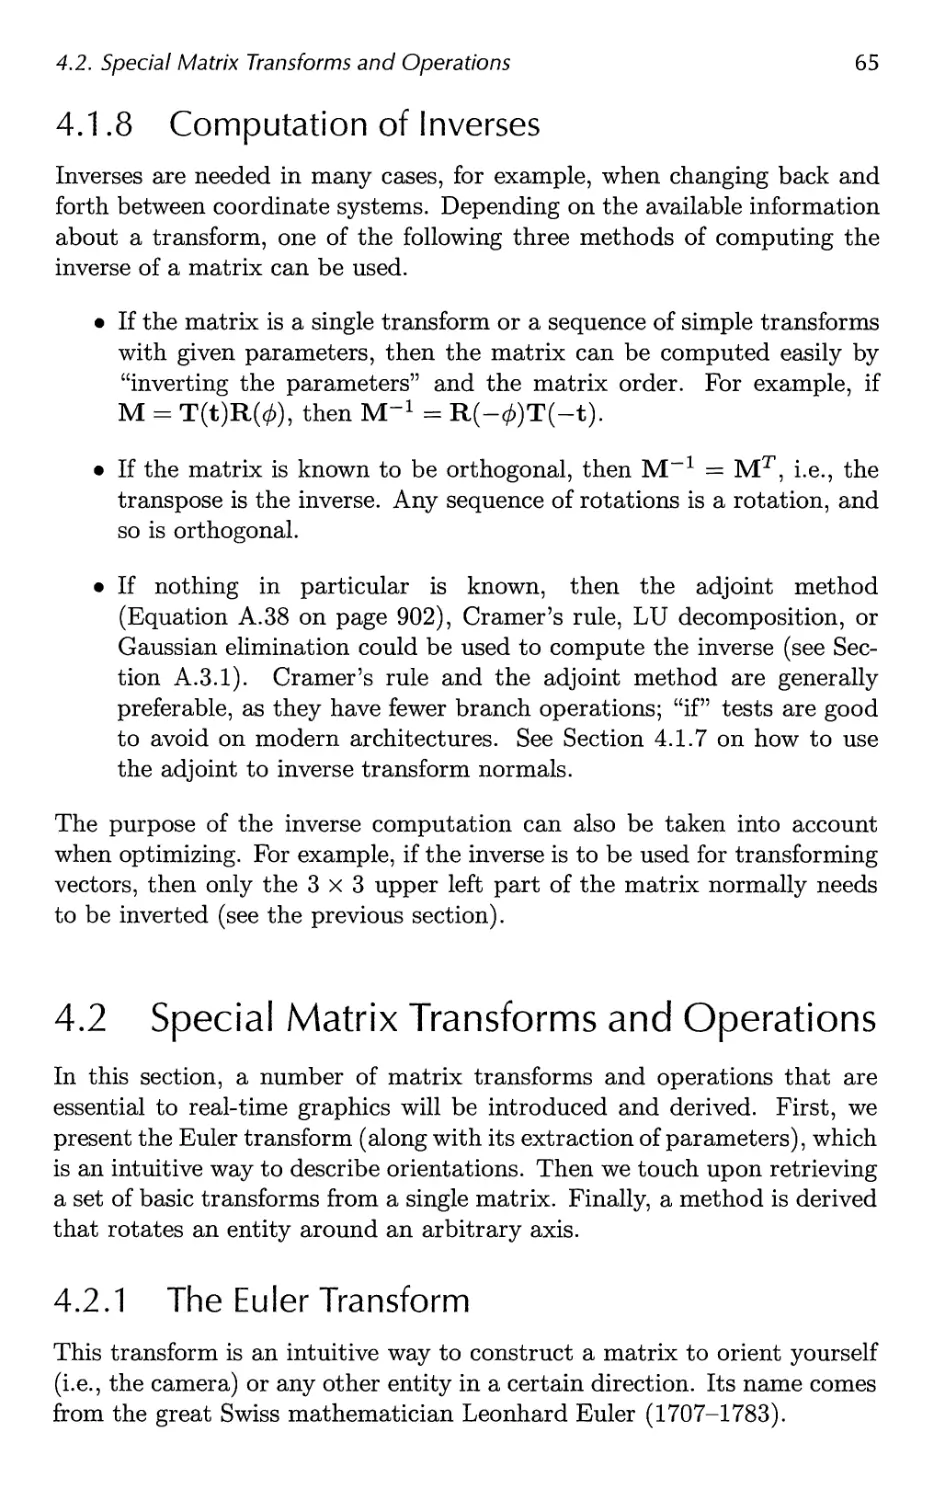 4.2 Special Matrix Transforms and Operations